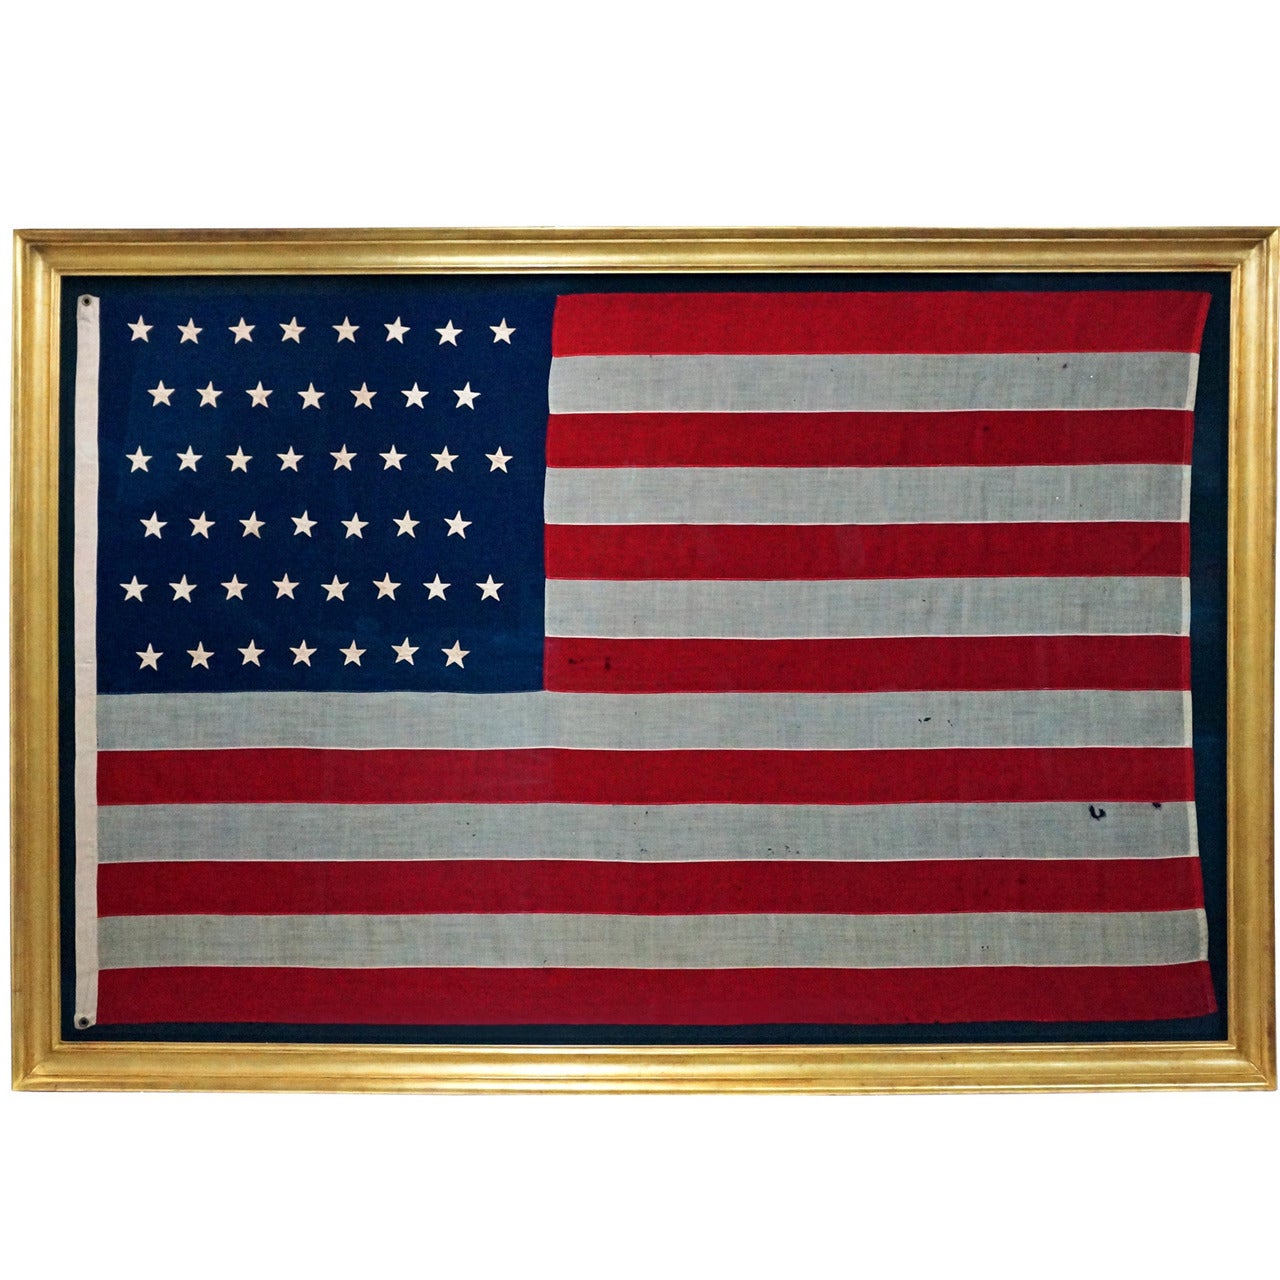 45 Star Spanish-American War Period American Flag